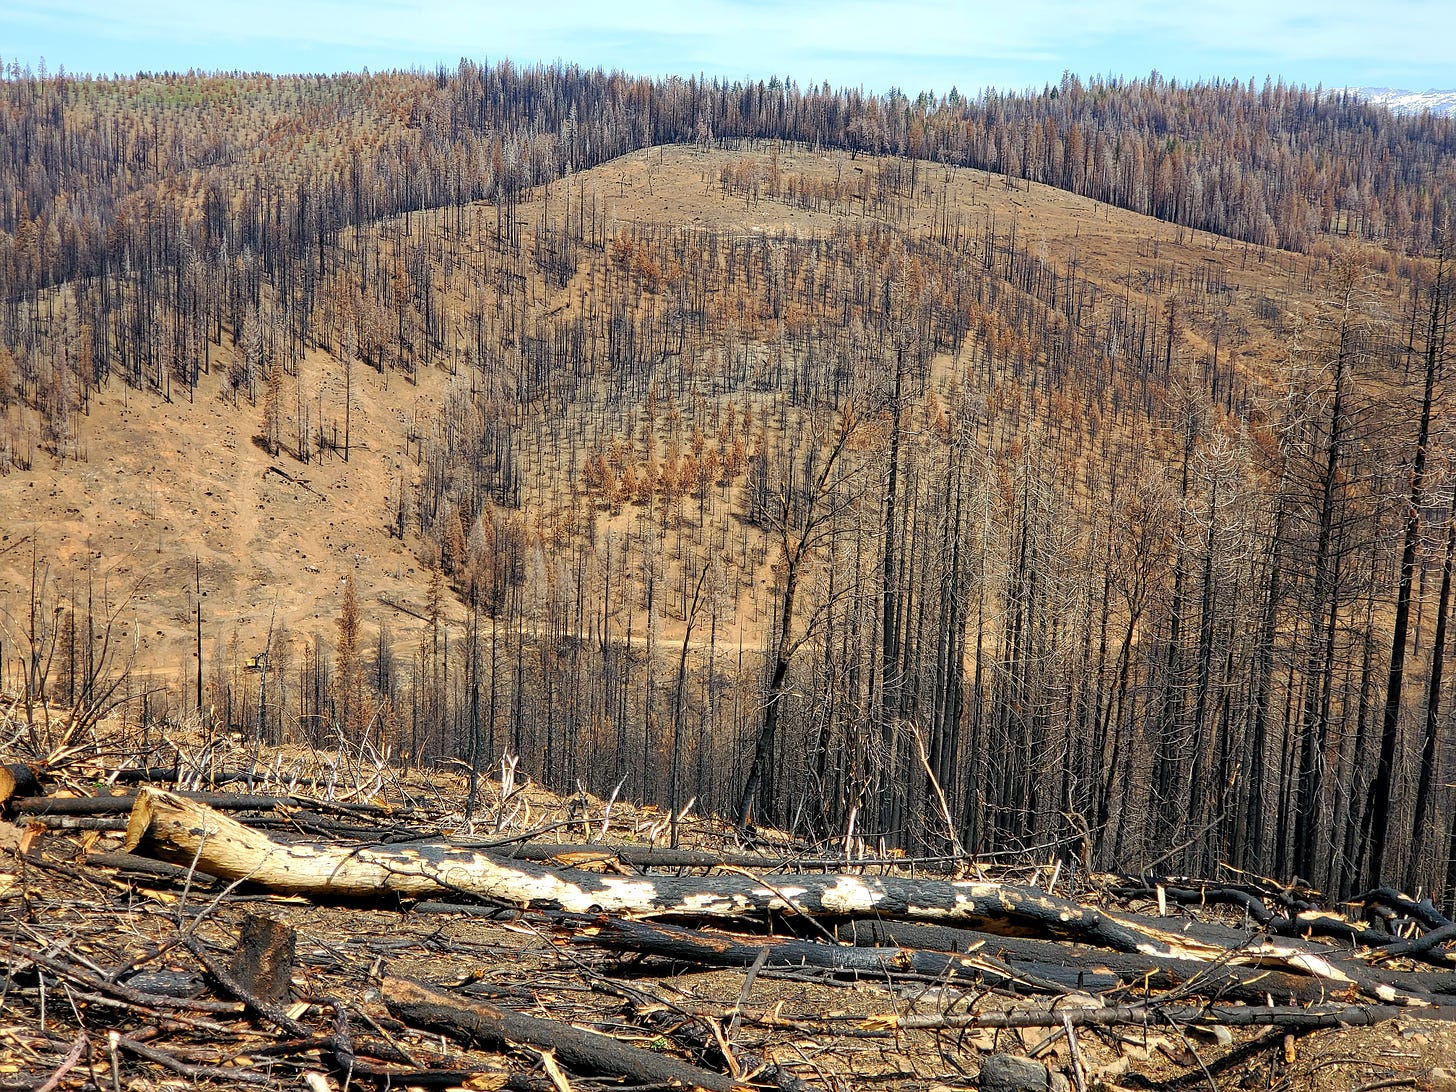 Burned forest and barren hillside.